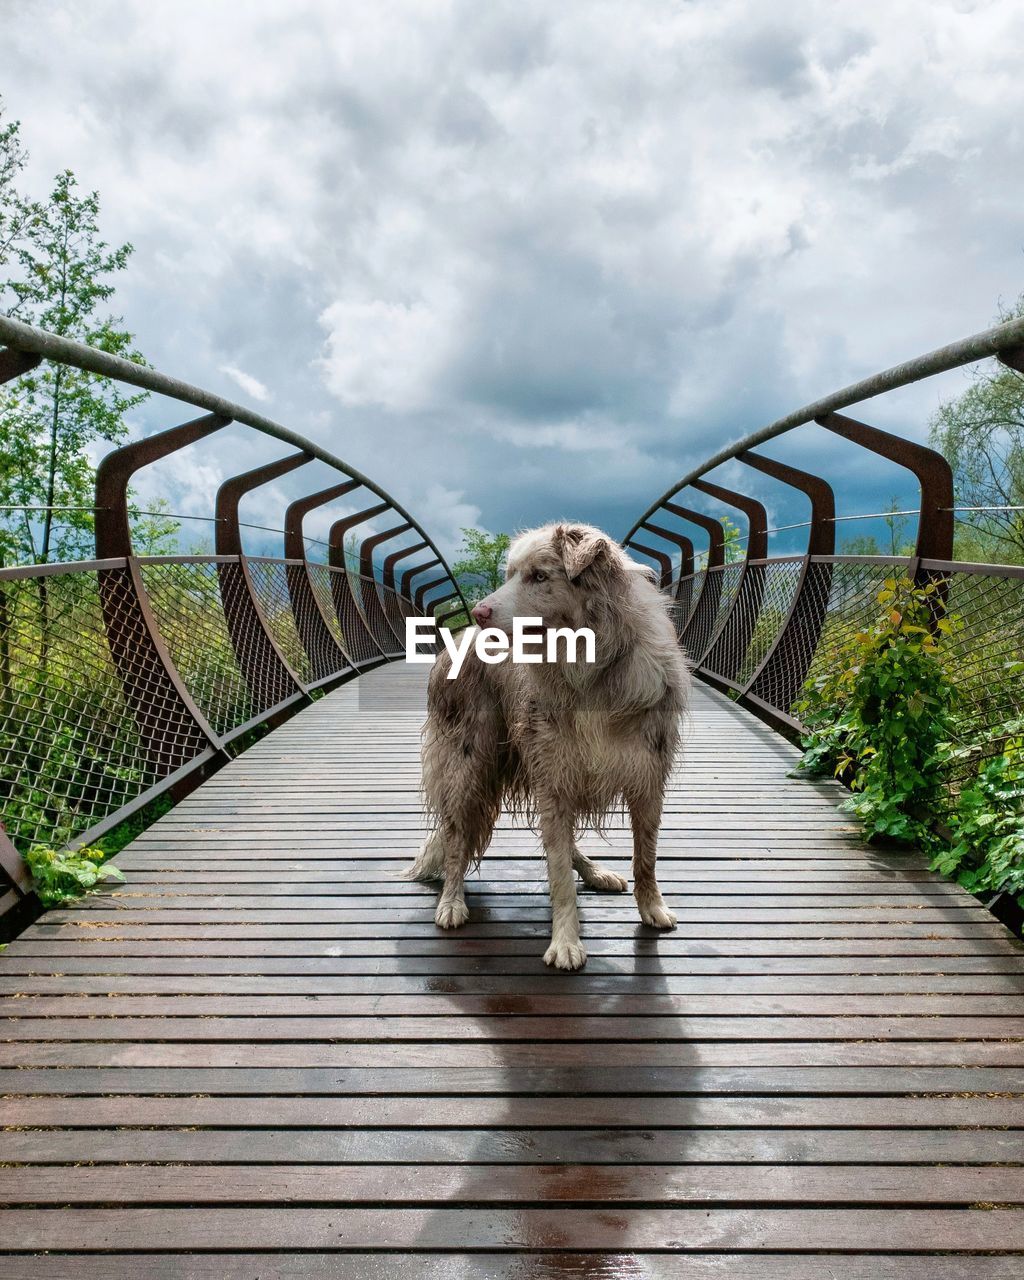 Dog on the bridge 